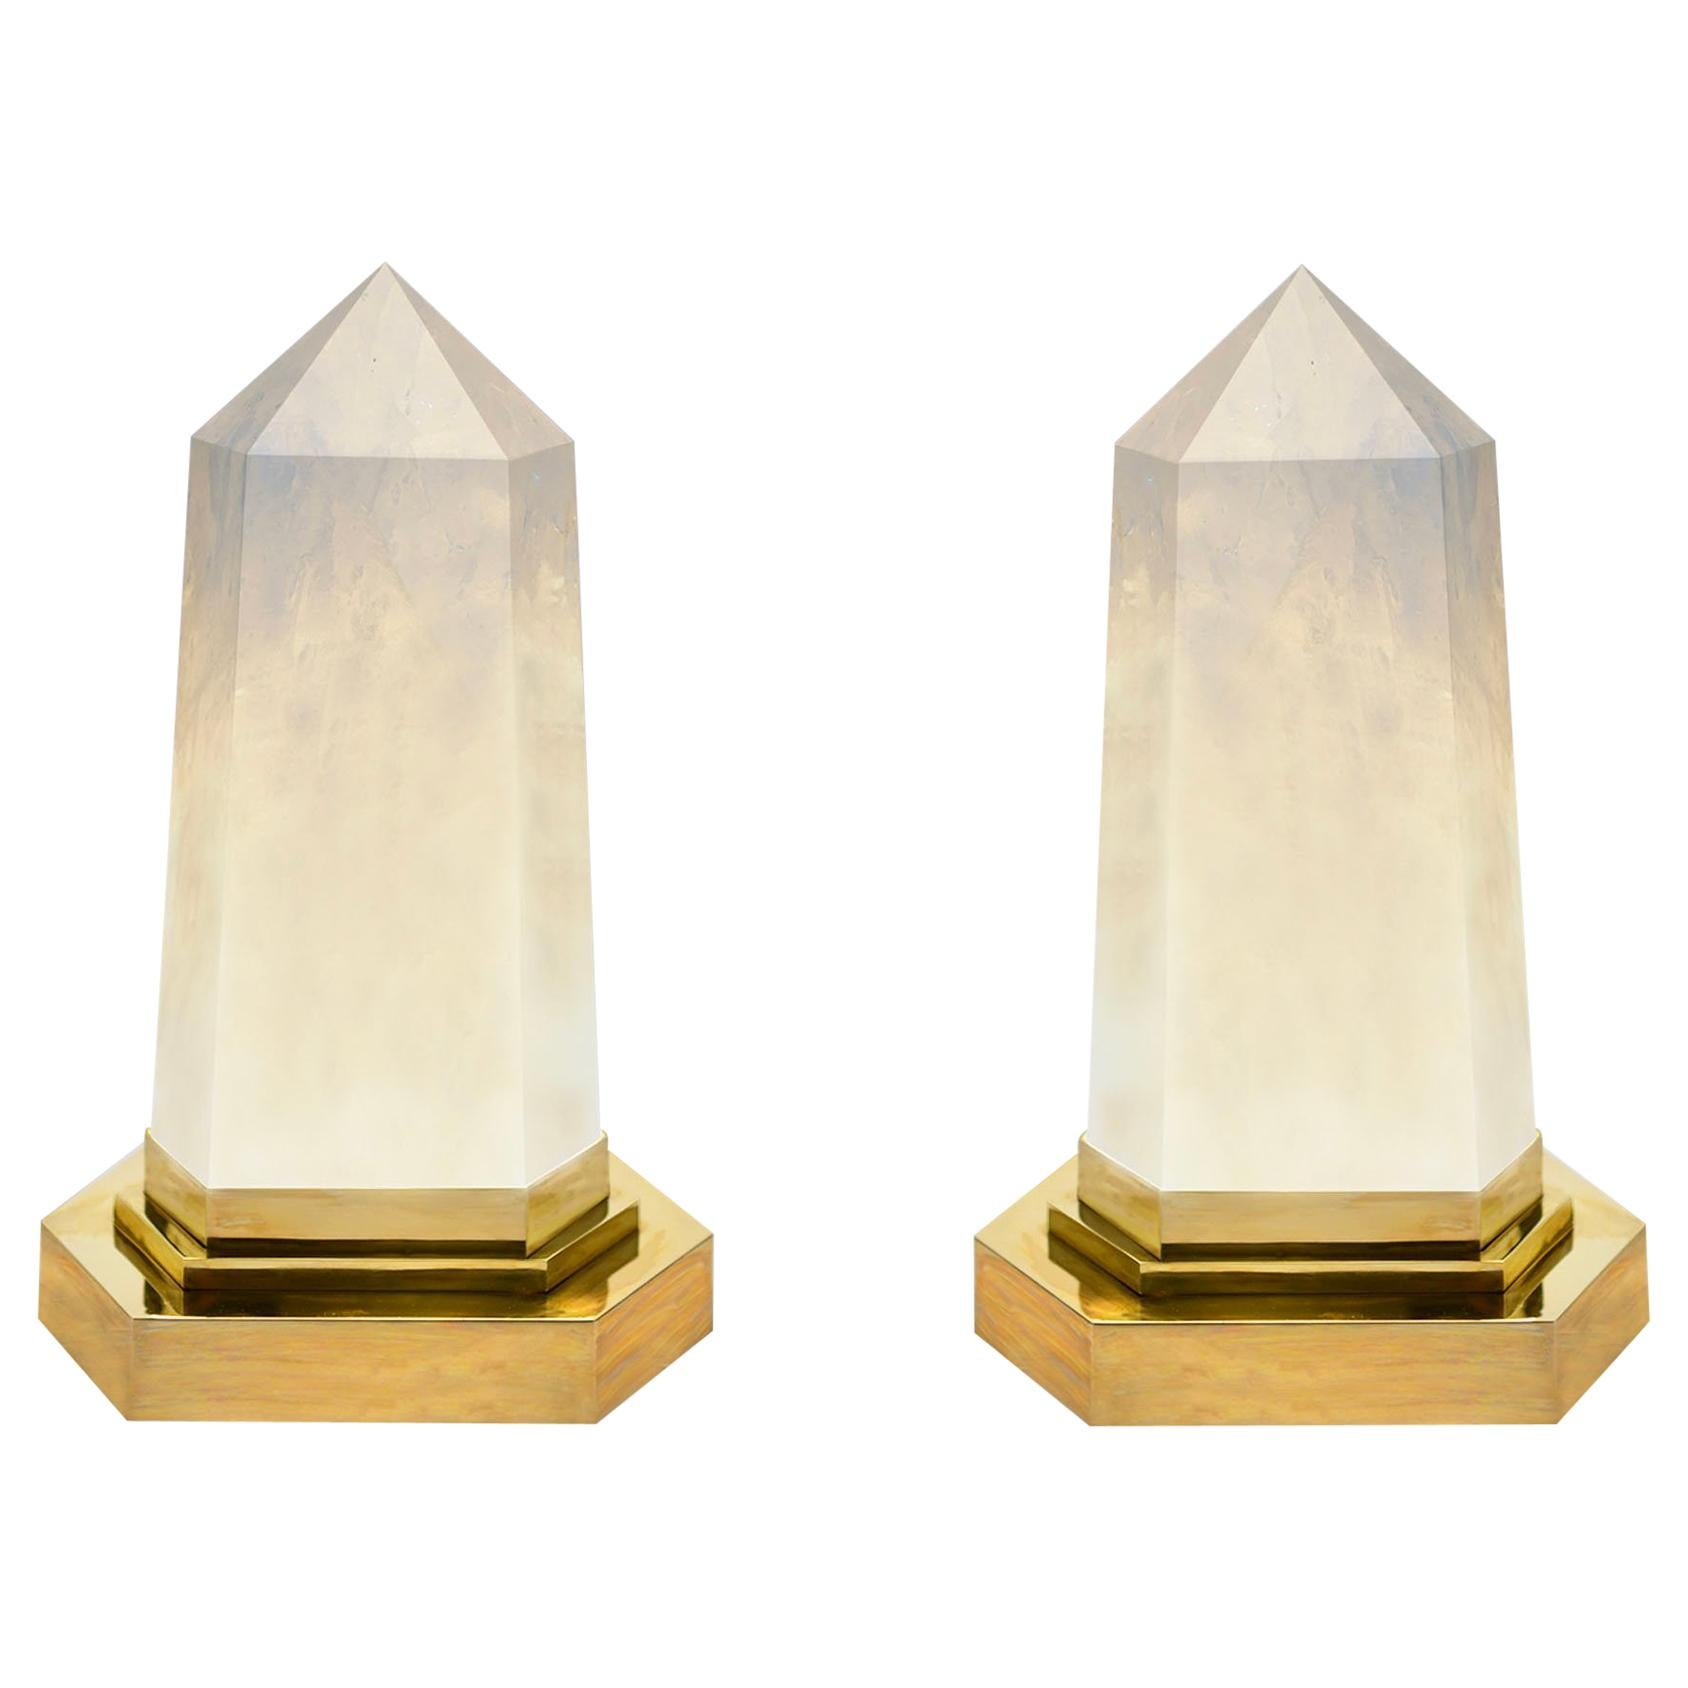 Rock Crystal Obelisk Lights by Phoenix